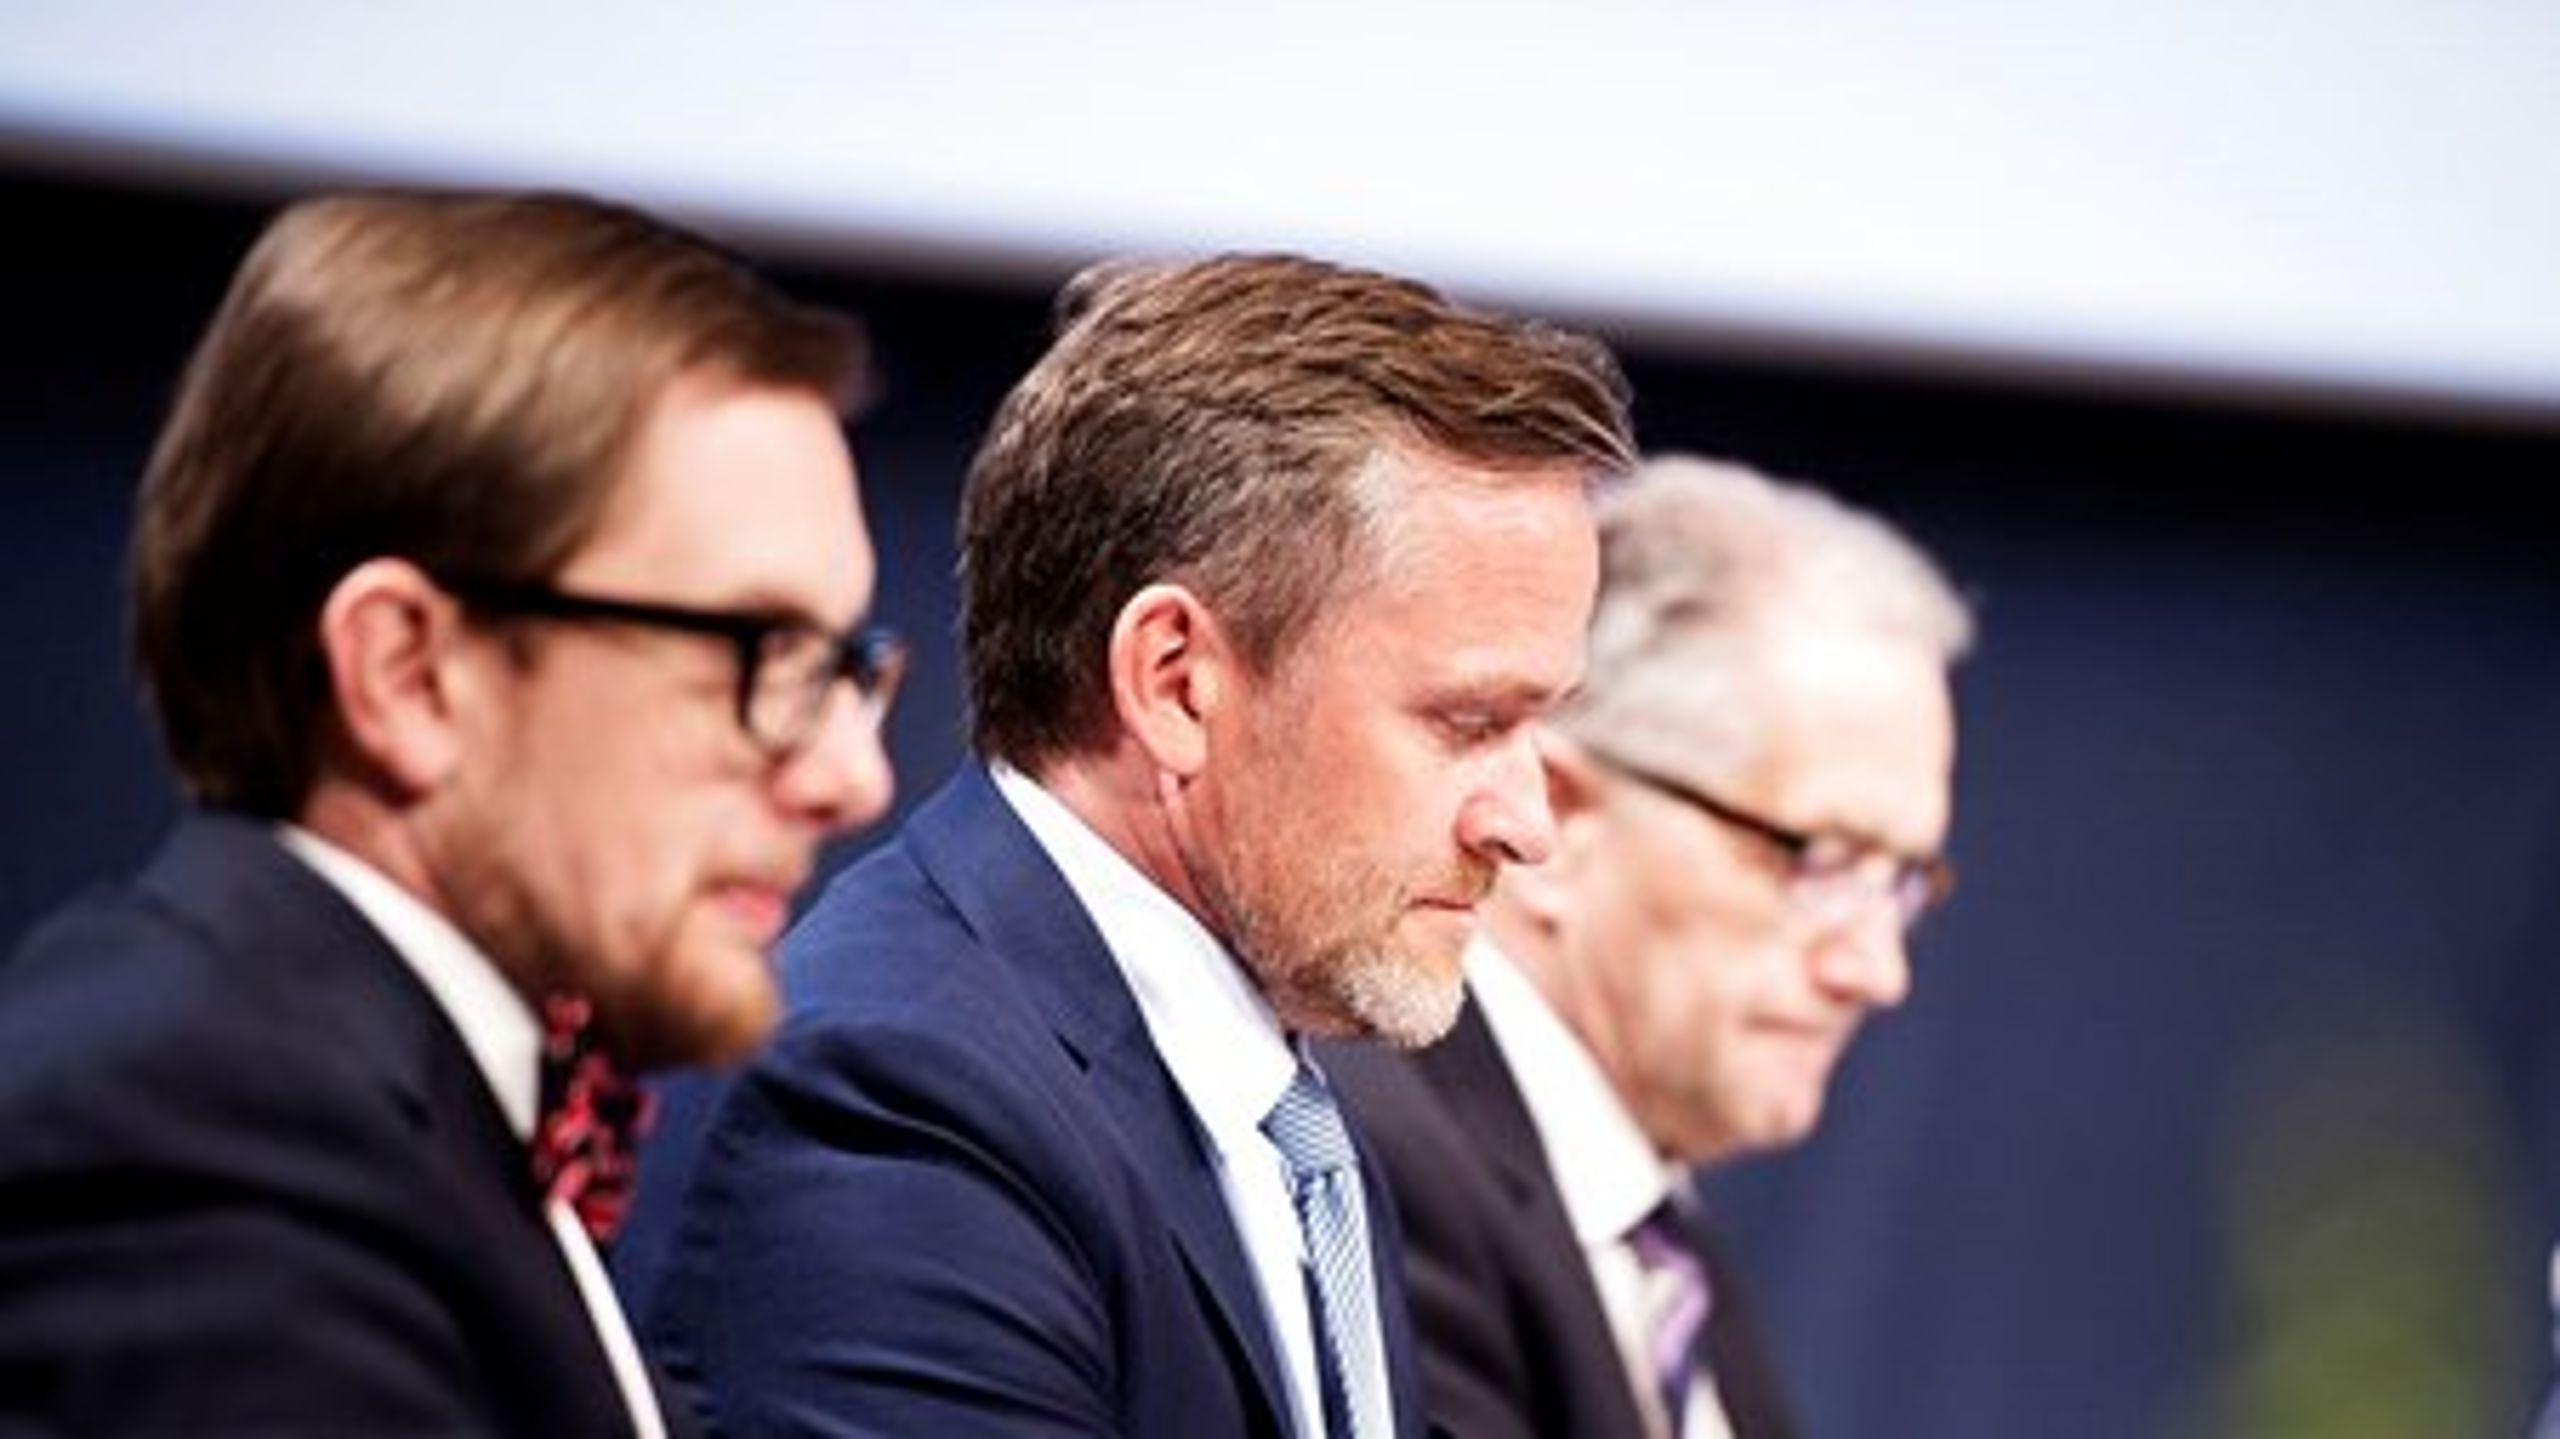 Liberal Alliances politiske ordfører, Simon Emil Ammitzbøll, partileder Anders Samuelsen og landsformand Leif Mikkelsen&nbsp;under landsmødet lørdag.